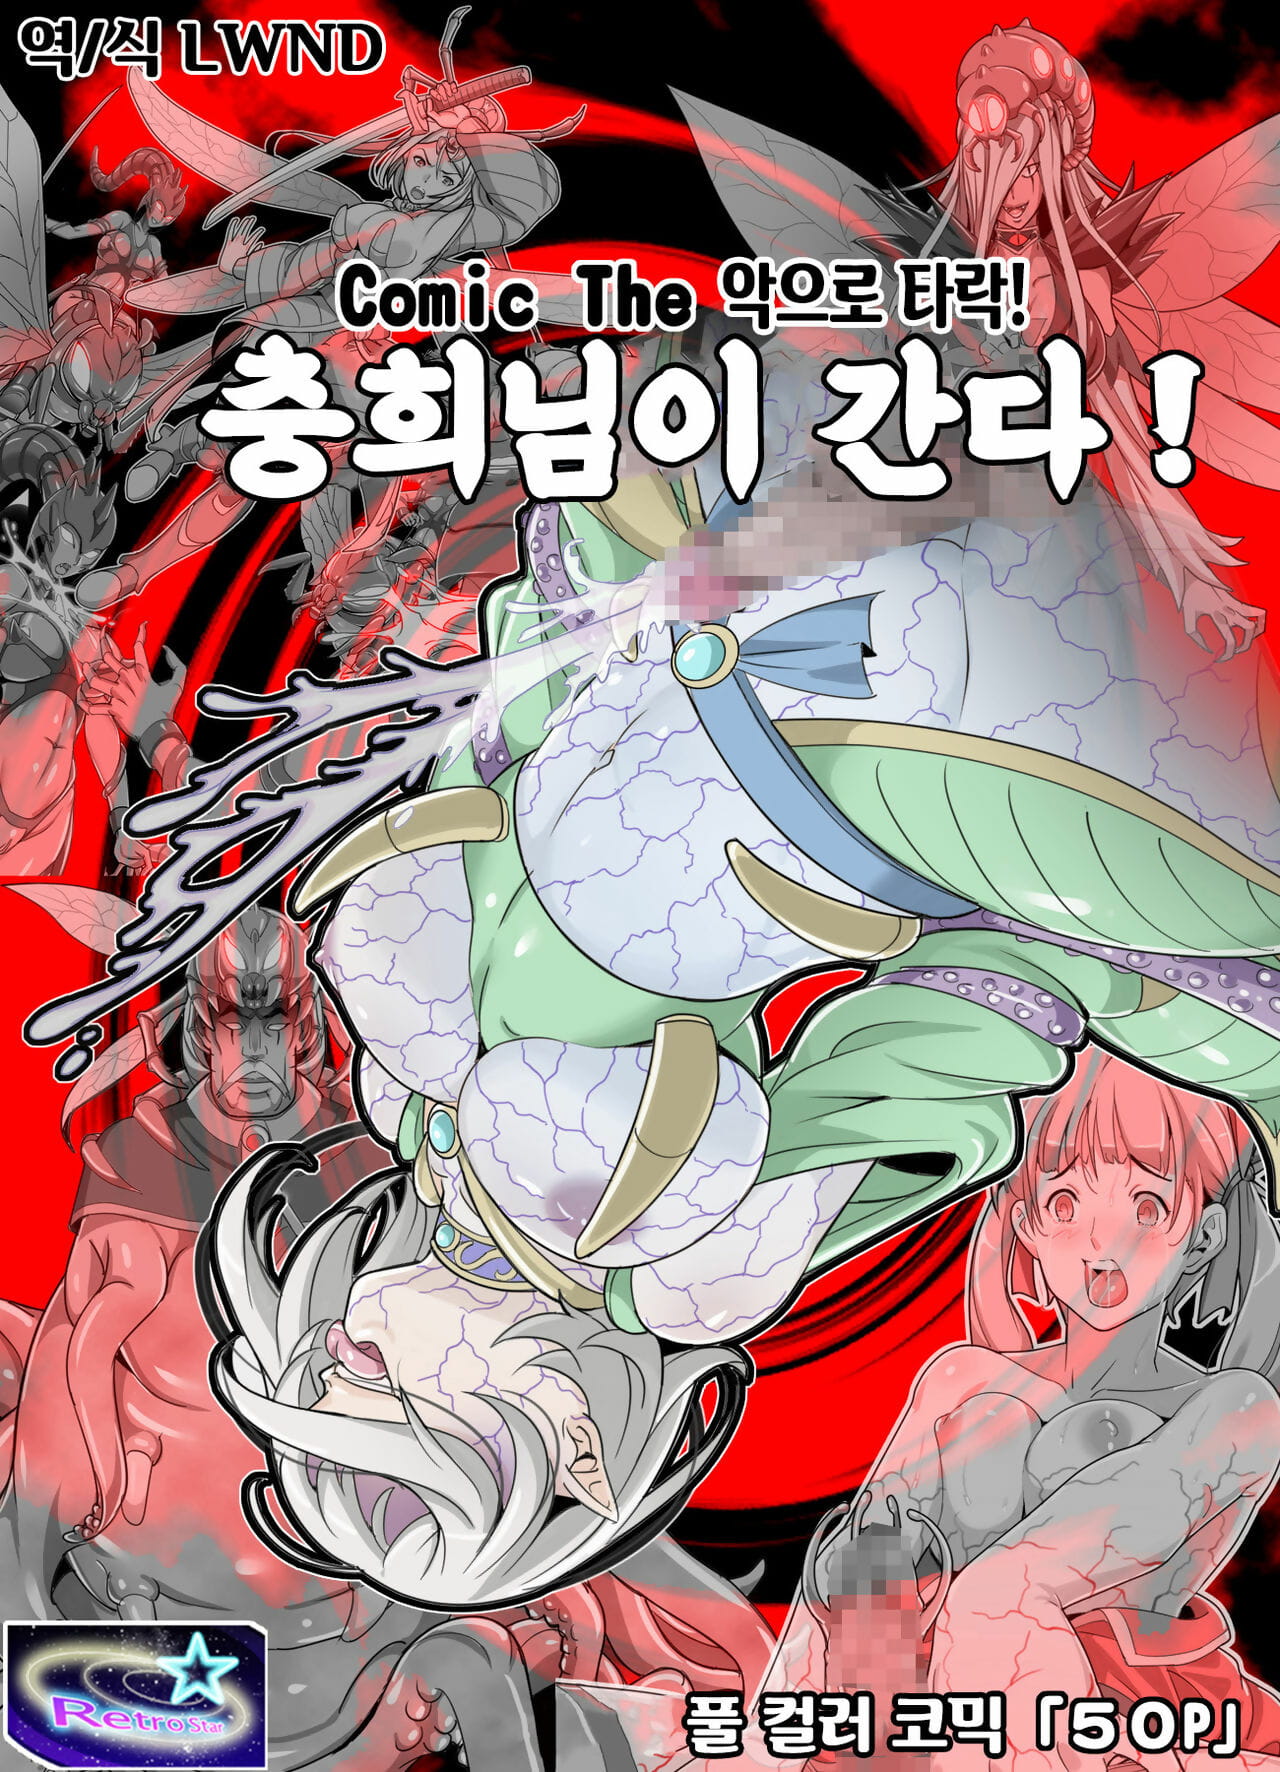 Retro Star Comic The Akuochi! Mushihime-sama ga Iku! - Comic The 악으로 타락! 충희님이 간다! Korean LWND